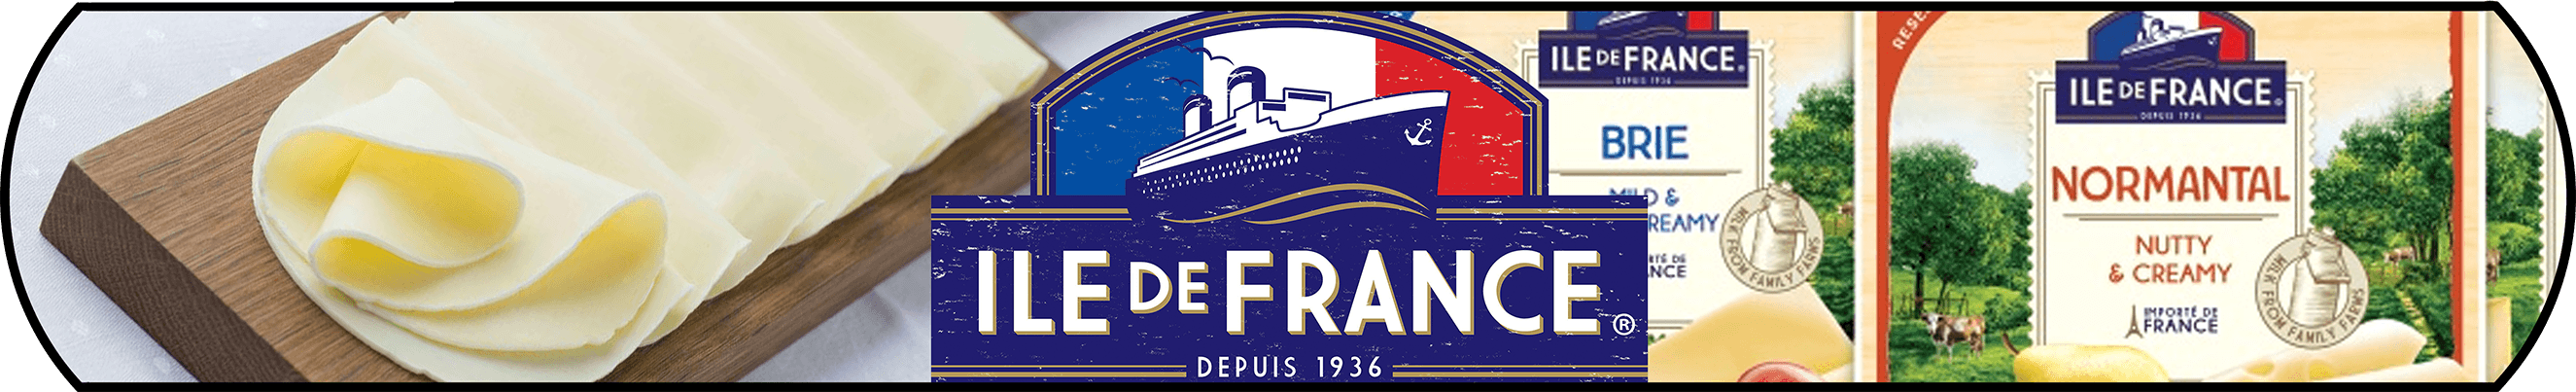 Ile de France Slices Banner